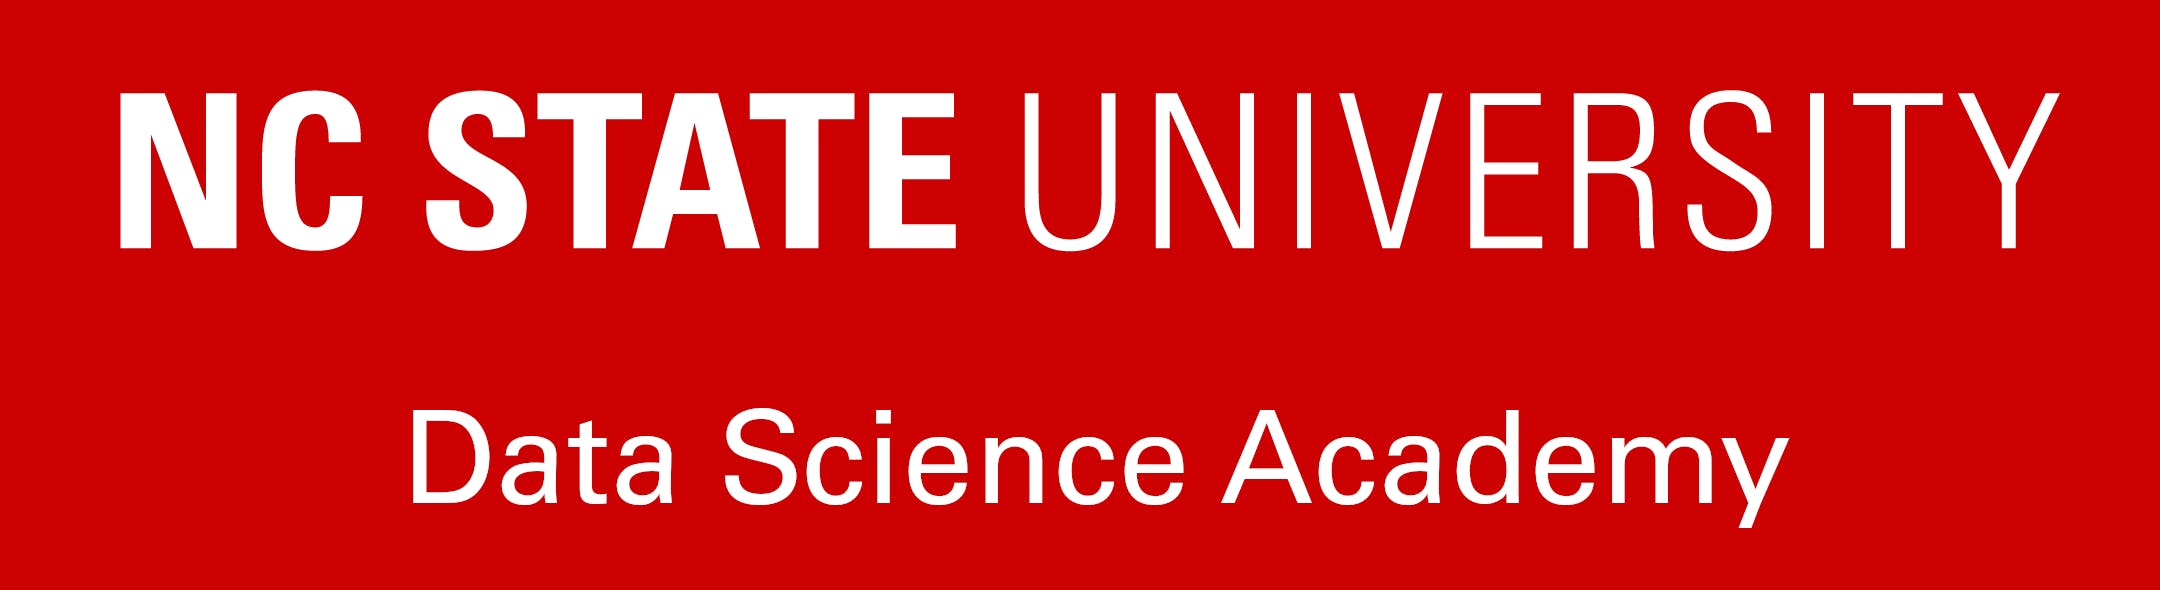 NC State University Data Science Academy Logo